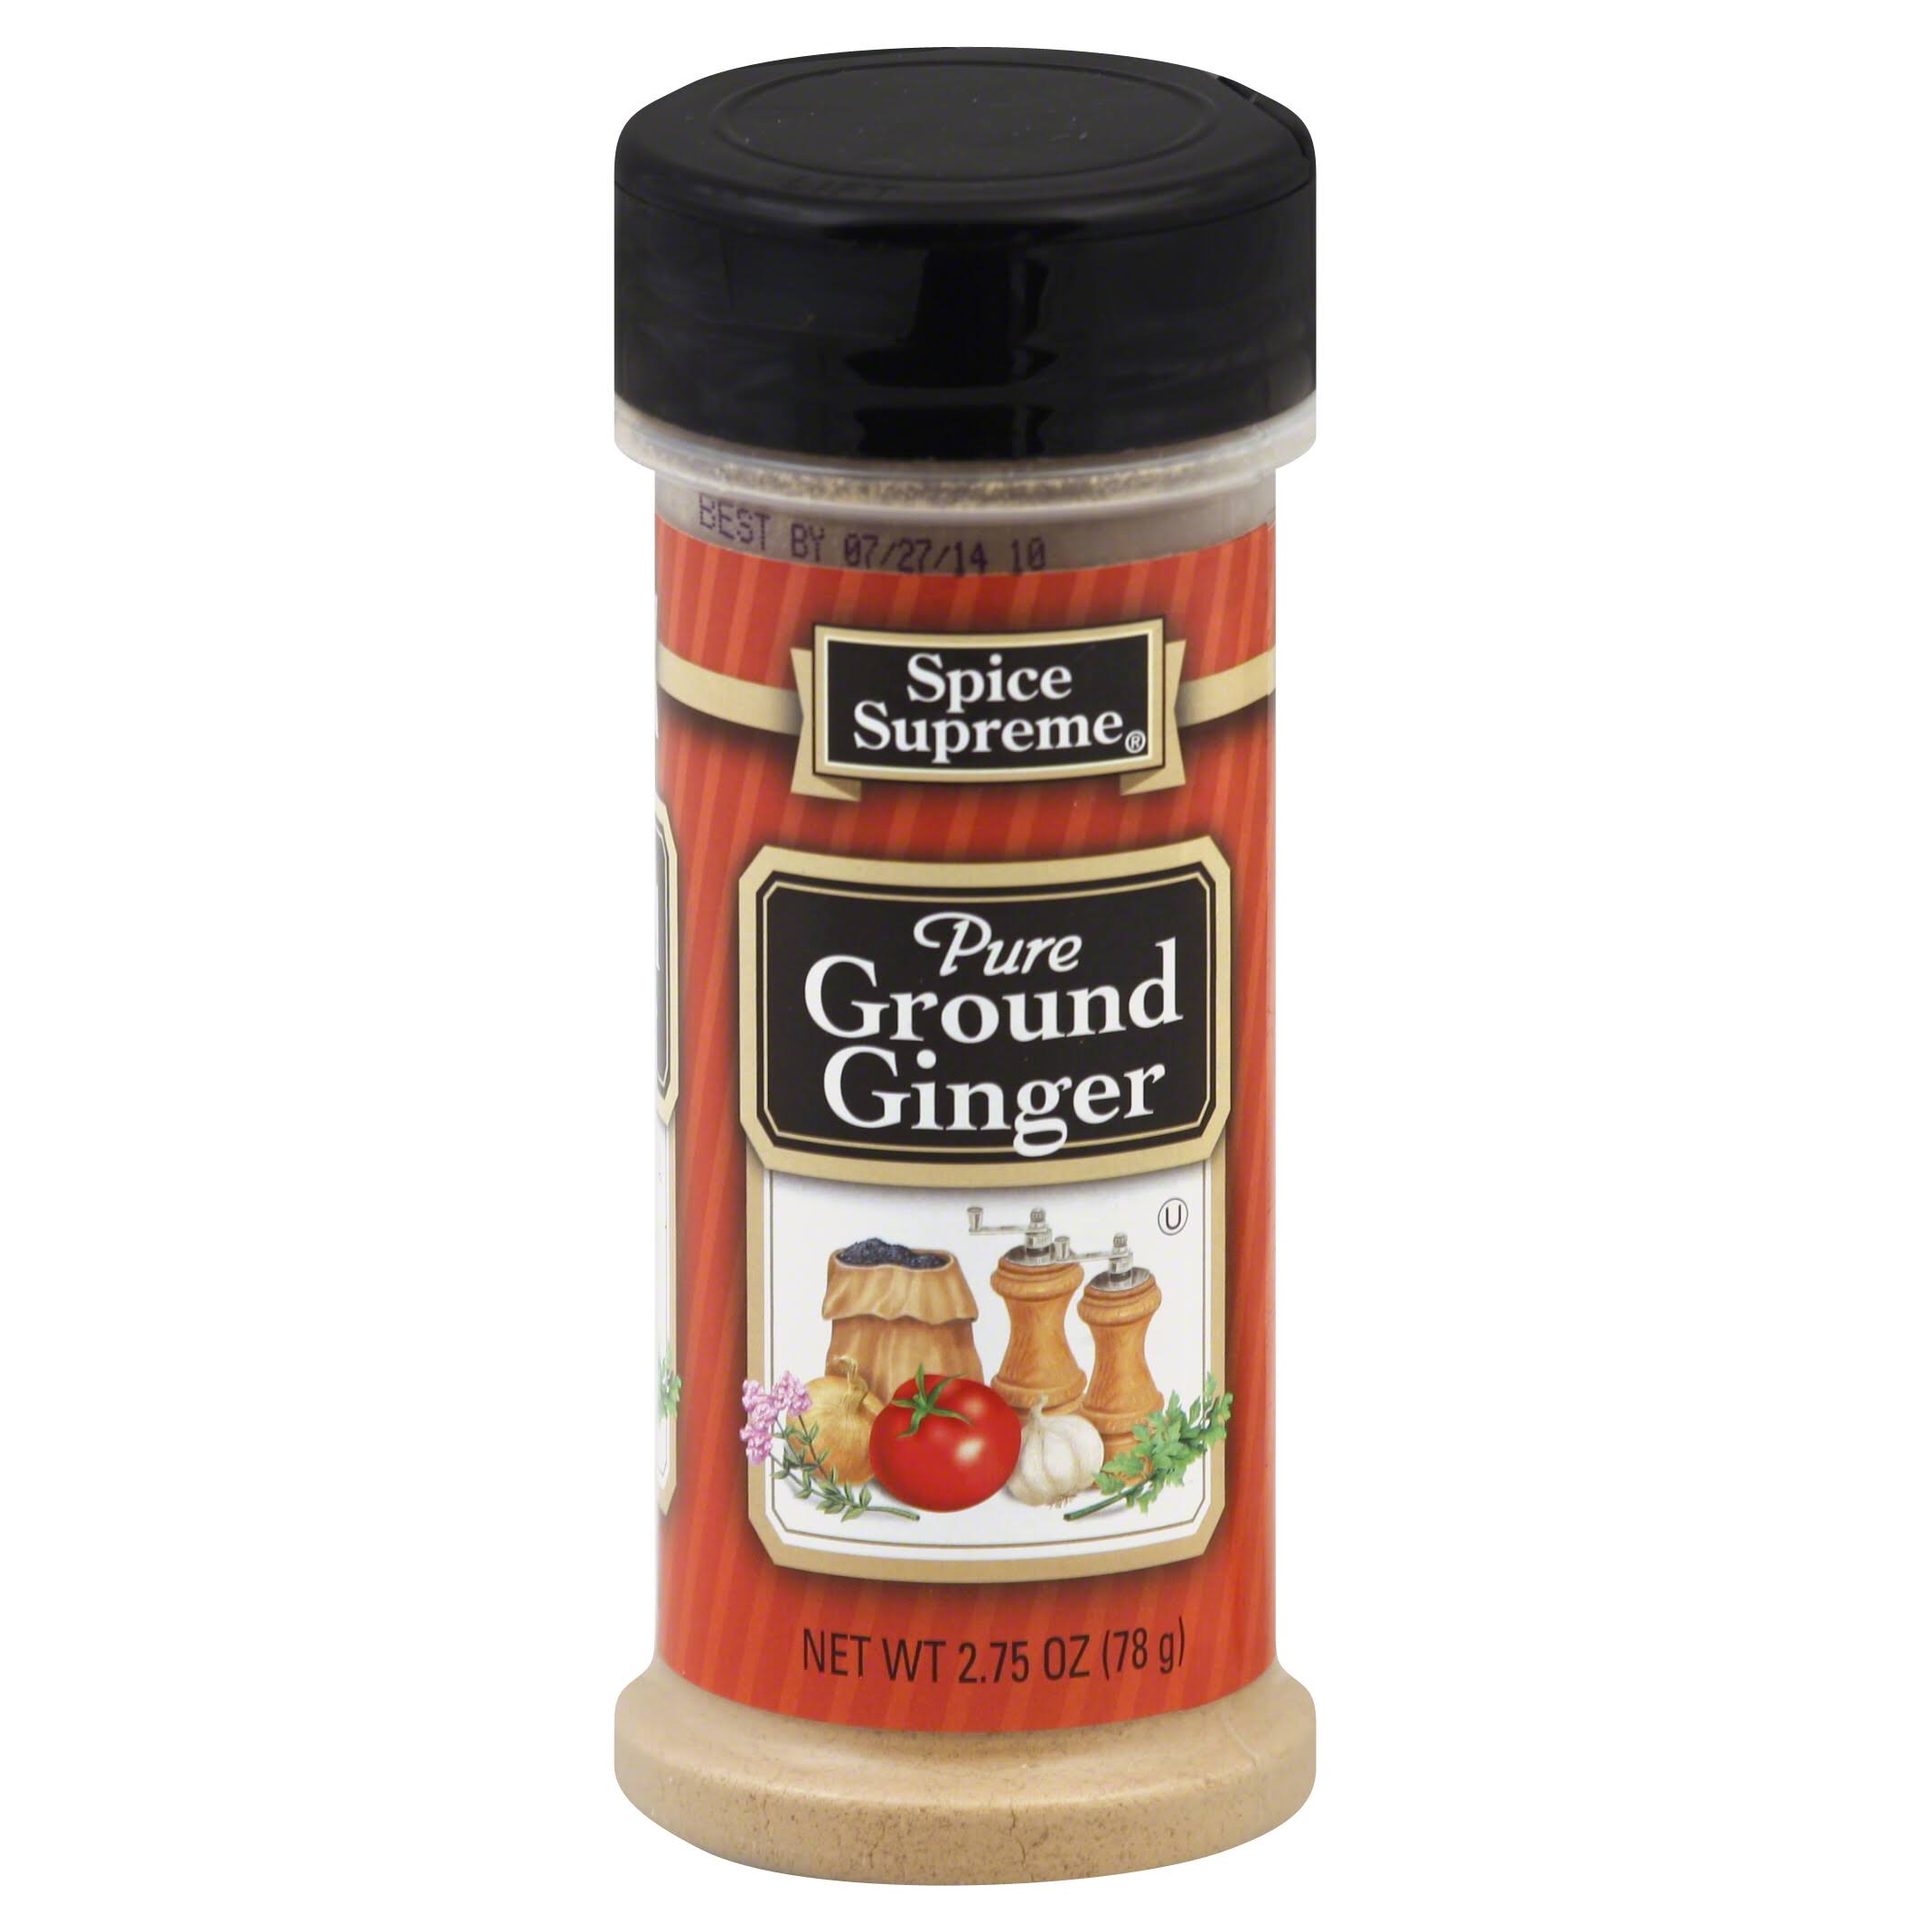 Spice Supreme Ground Ginger, Pure - 2.75 oz